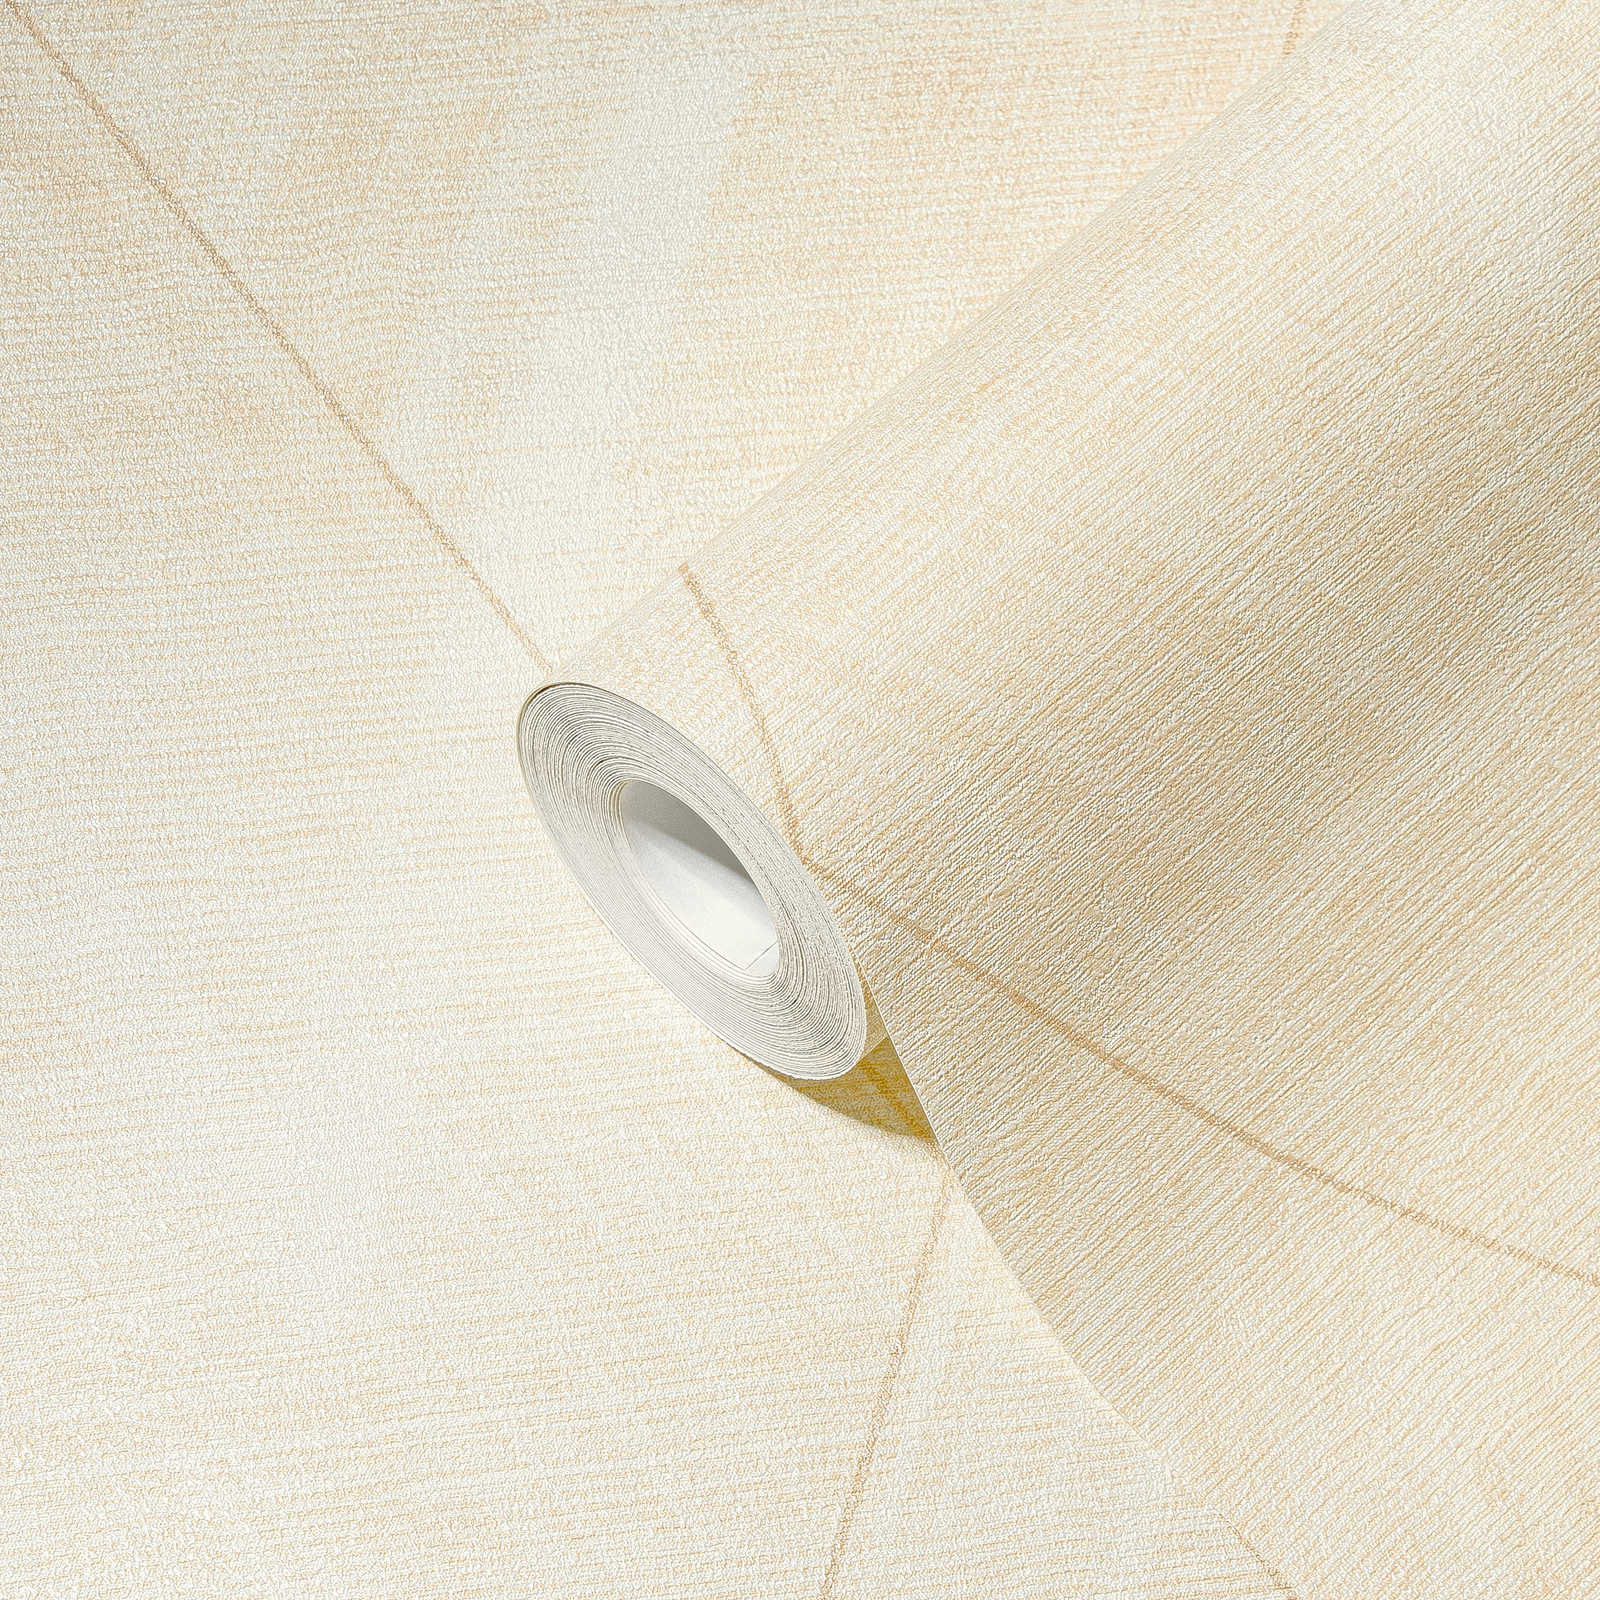             Lozenge wallpaper with textile look - metallic, cream, yellow
        